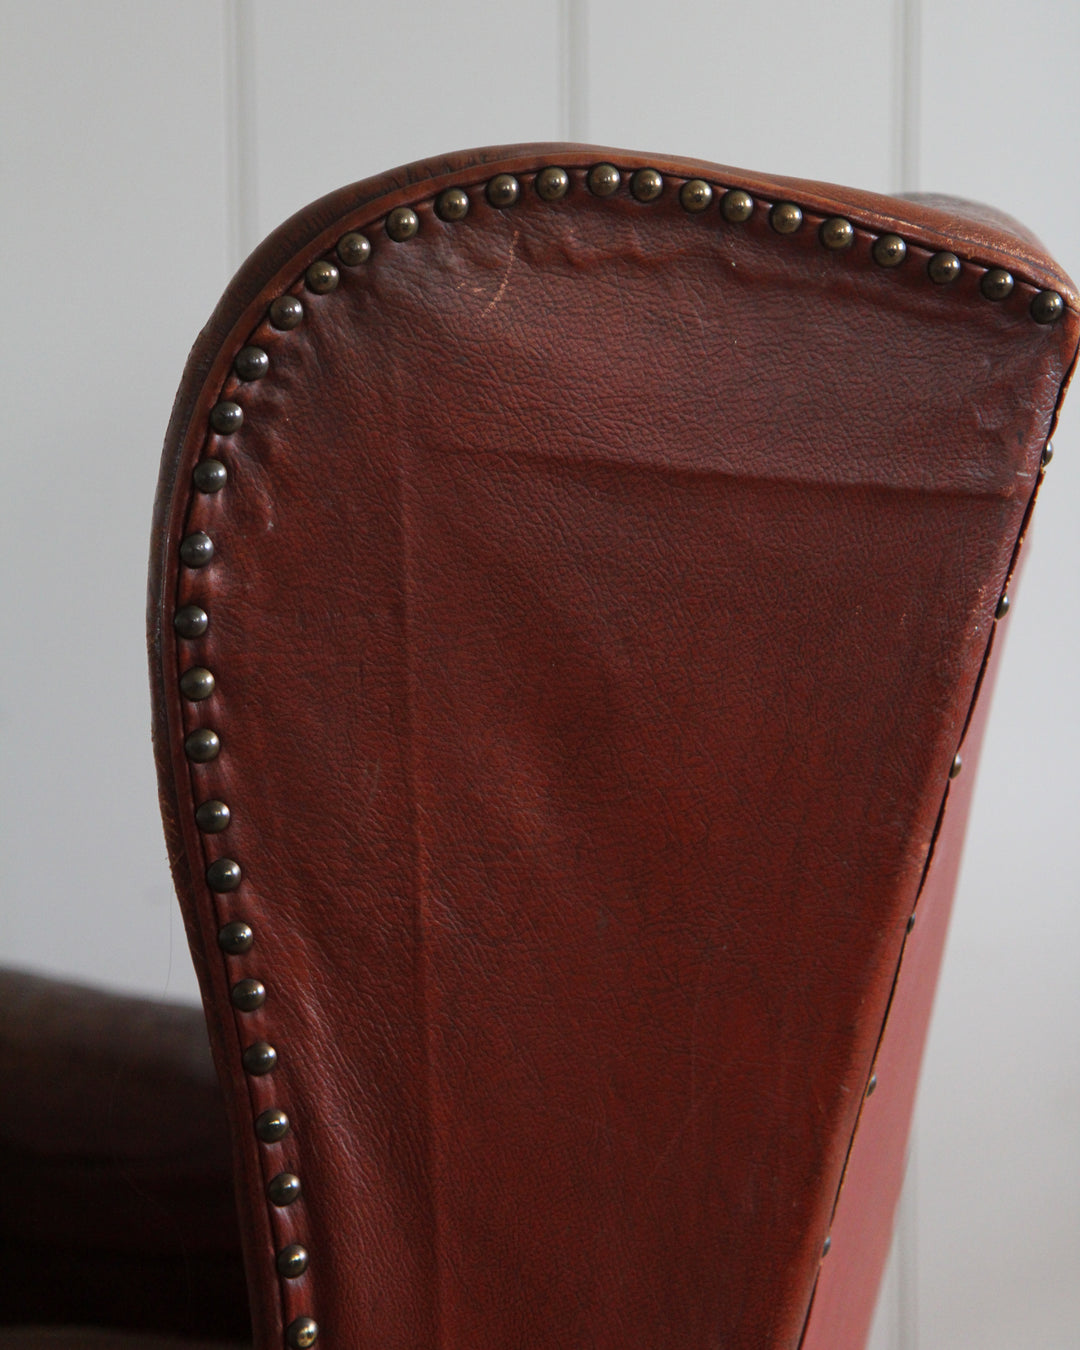 Mid Century Leather Armchair